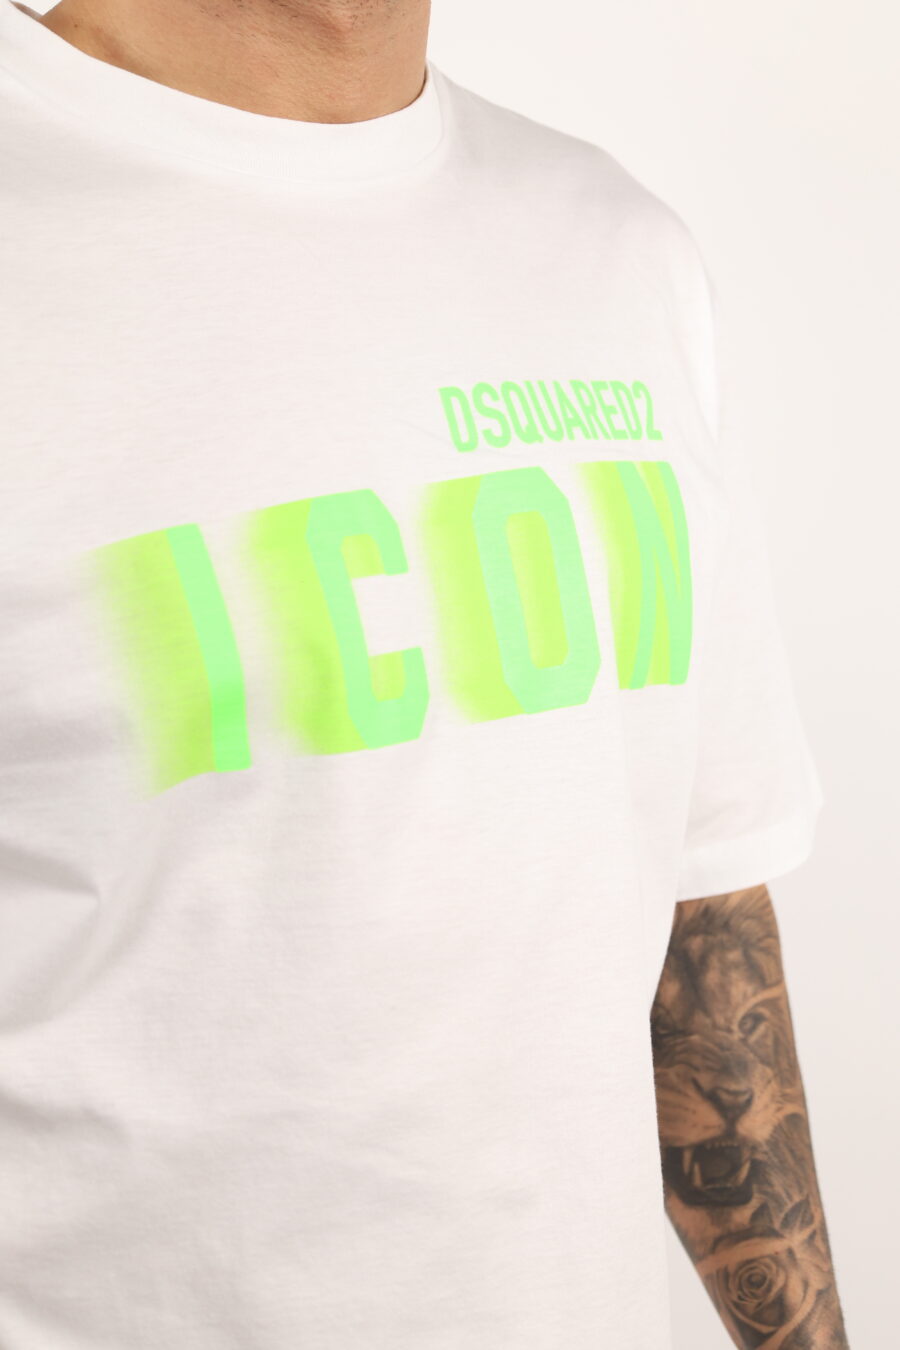 Camiseta blanca "oversize" con maxilogo "icon" verde neon borroso - 109145